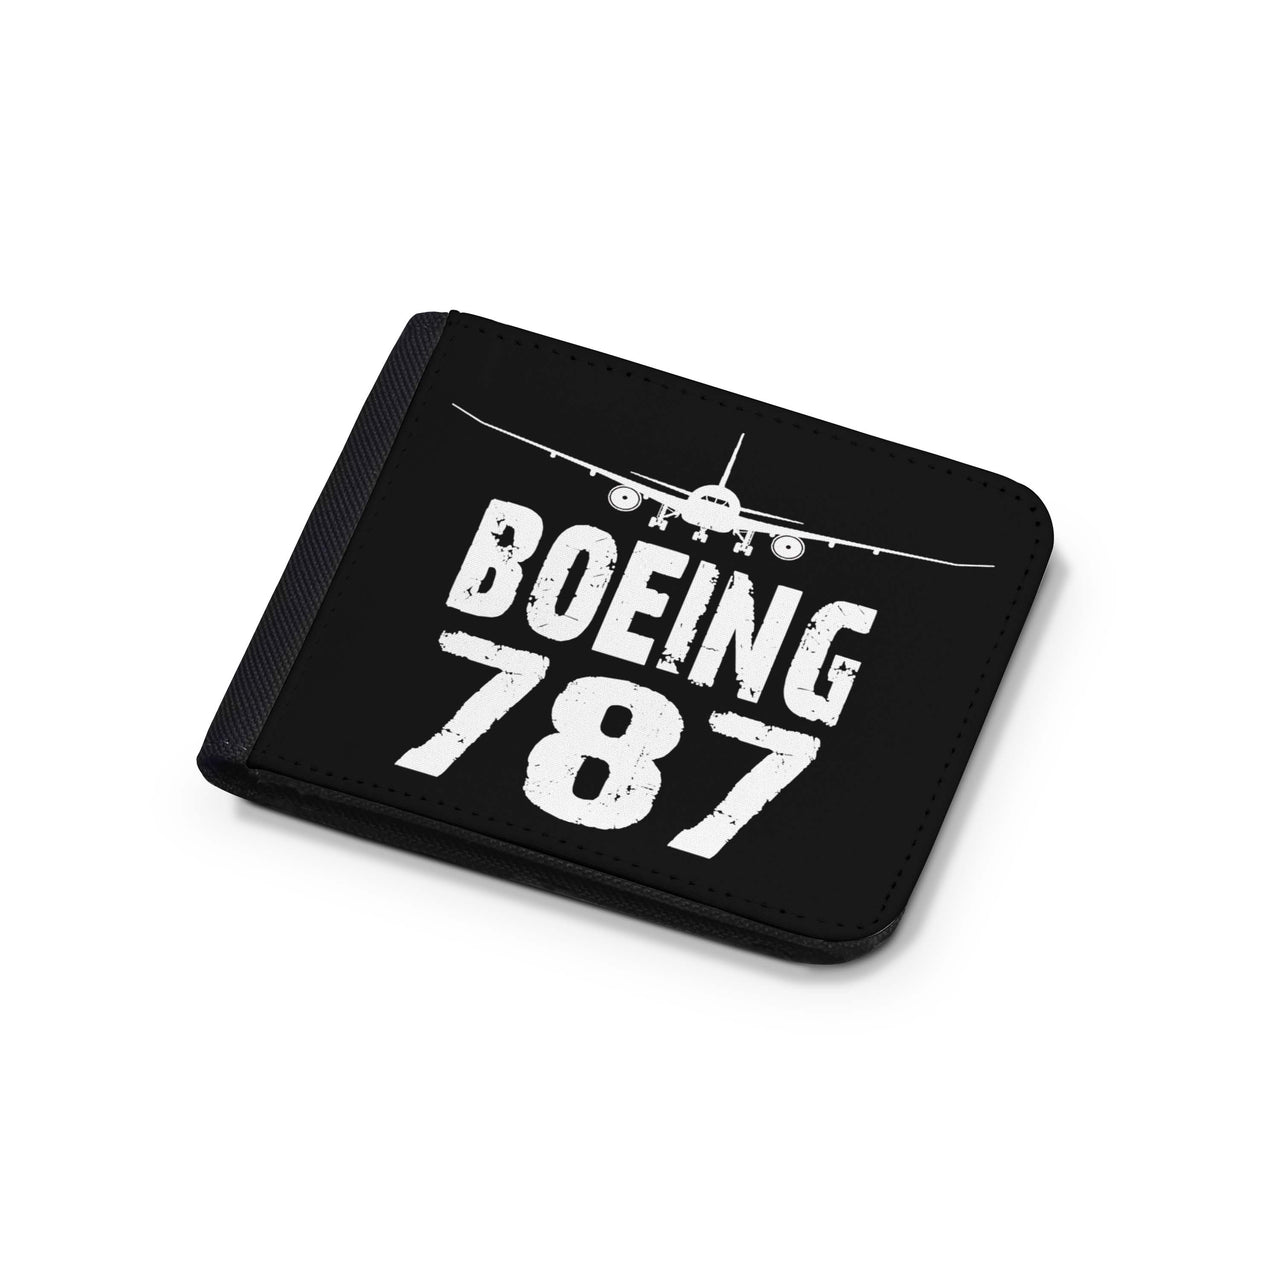 Boeing 787 & Plane Designed Wallets